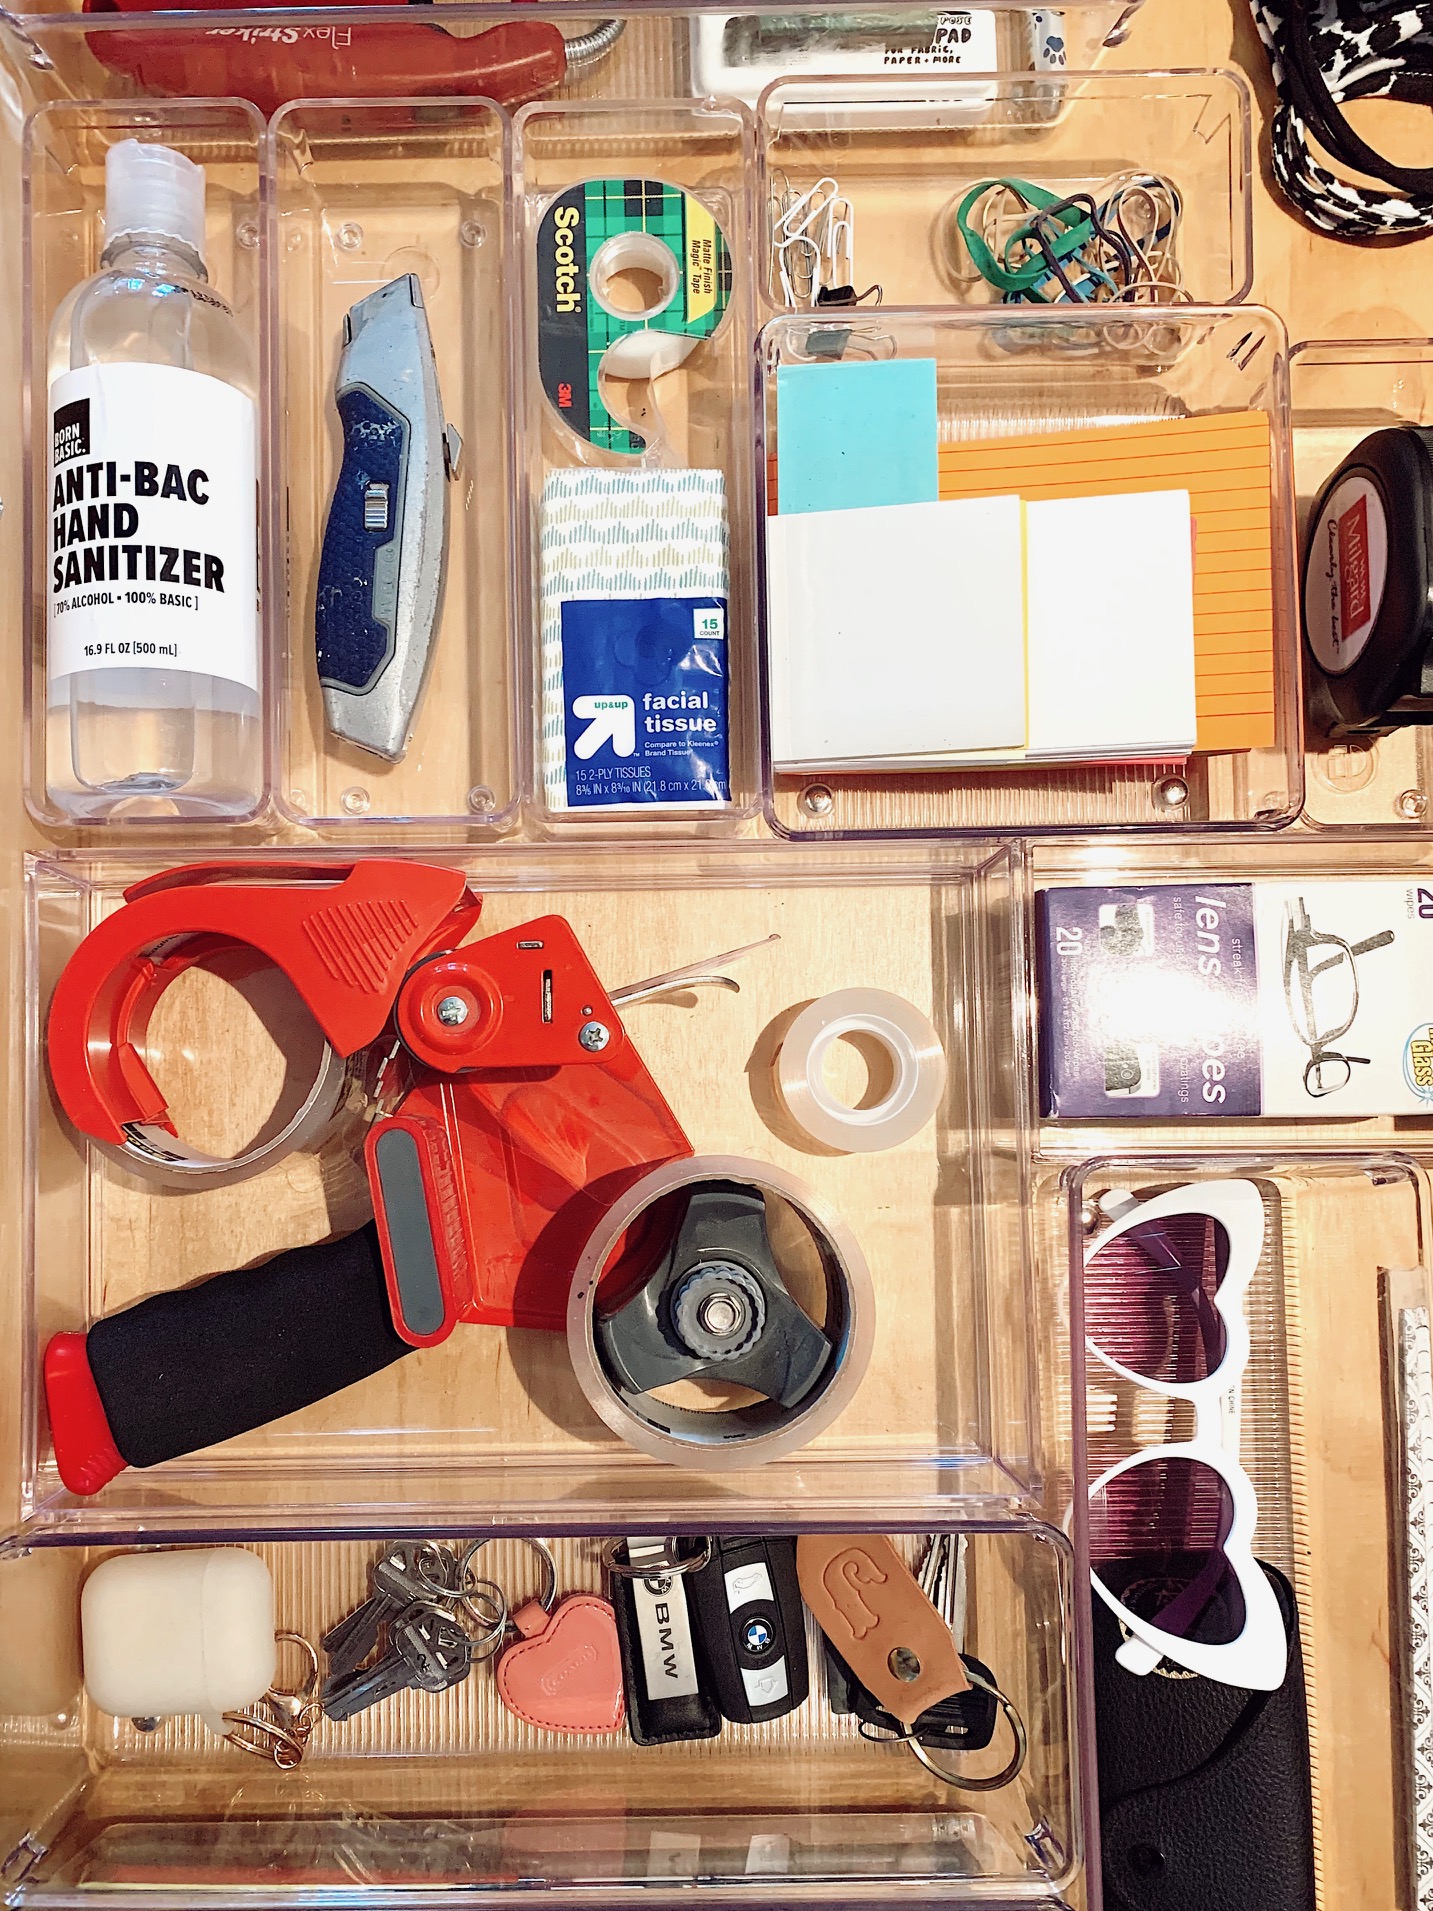 junk drawer organization | Acrylic Organizers by popular San Francisco lifestyle blog, Just Add Glam: image of a junk drawer organized with acrylic organizers.